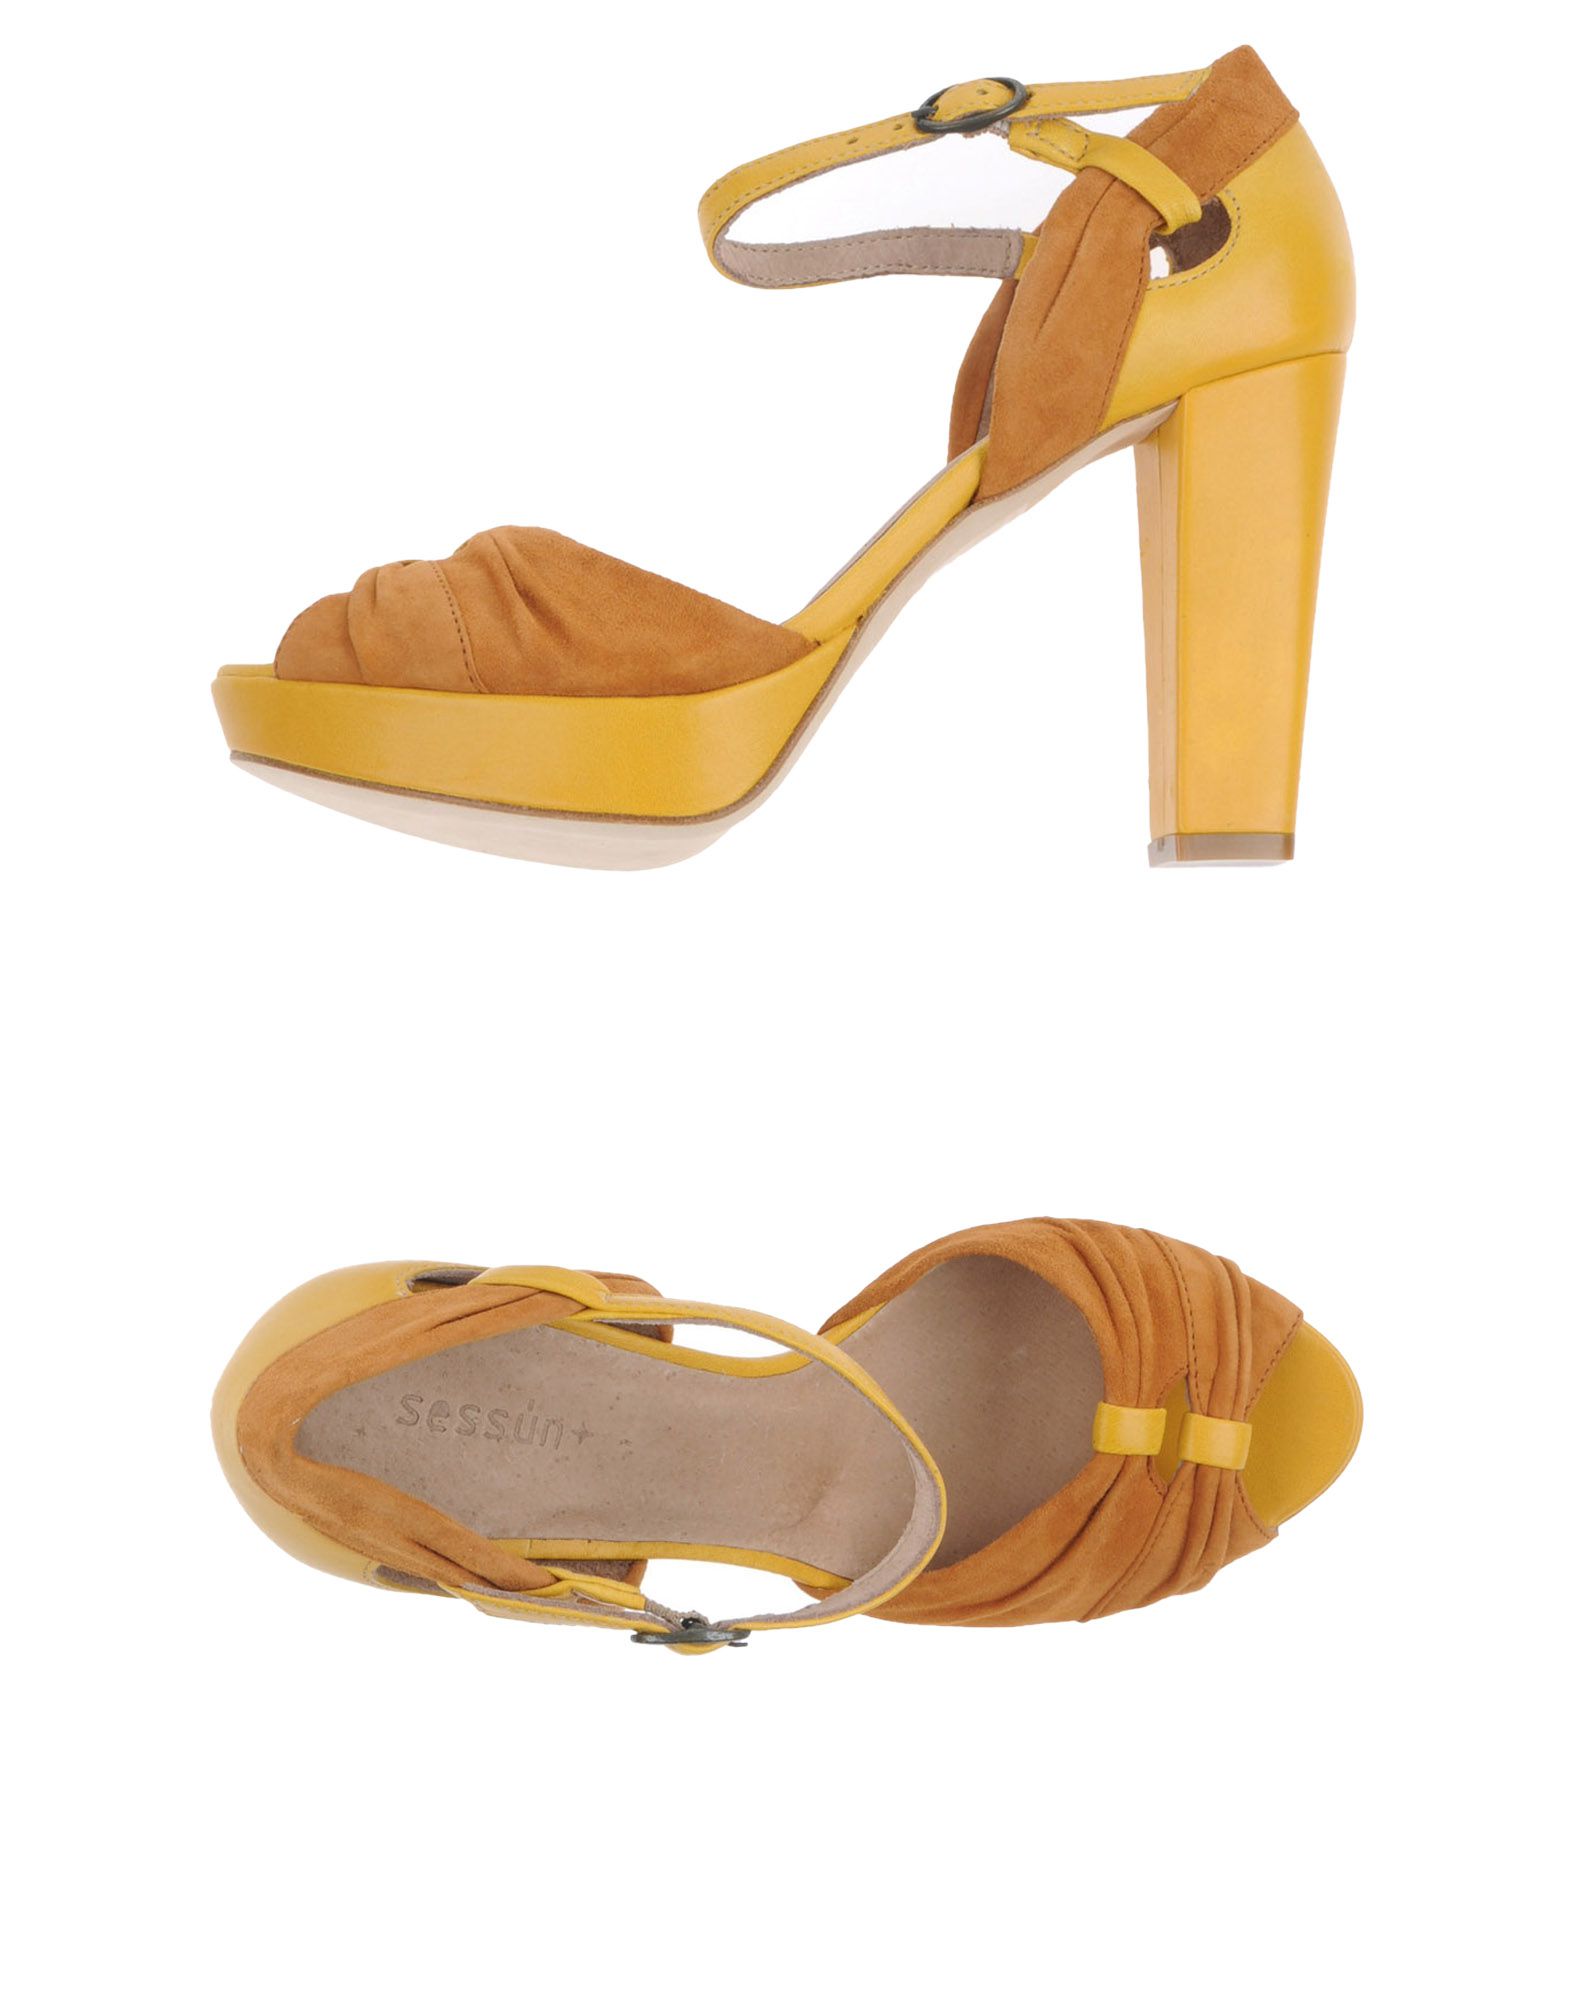 Sessun Platform Sandals in Yellow | Lyst